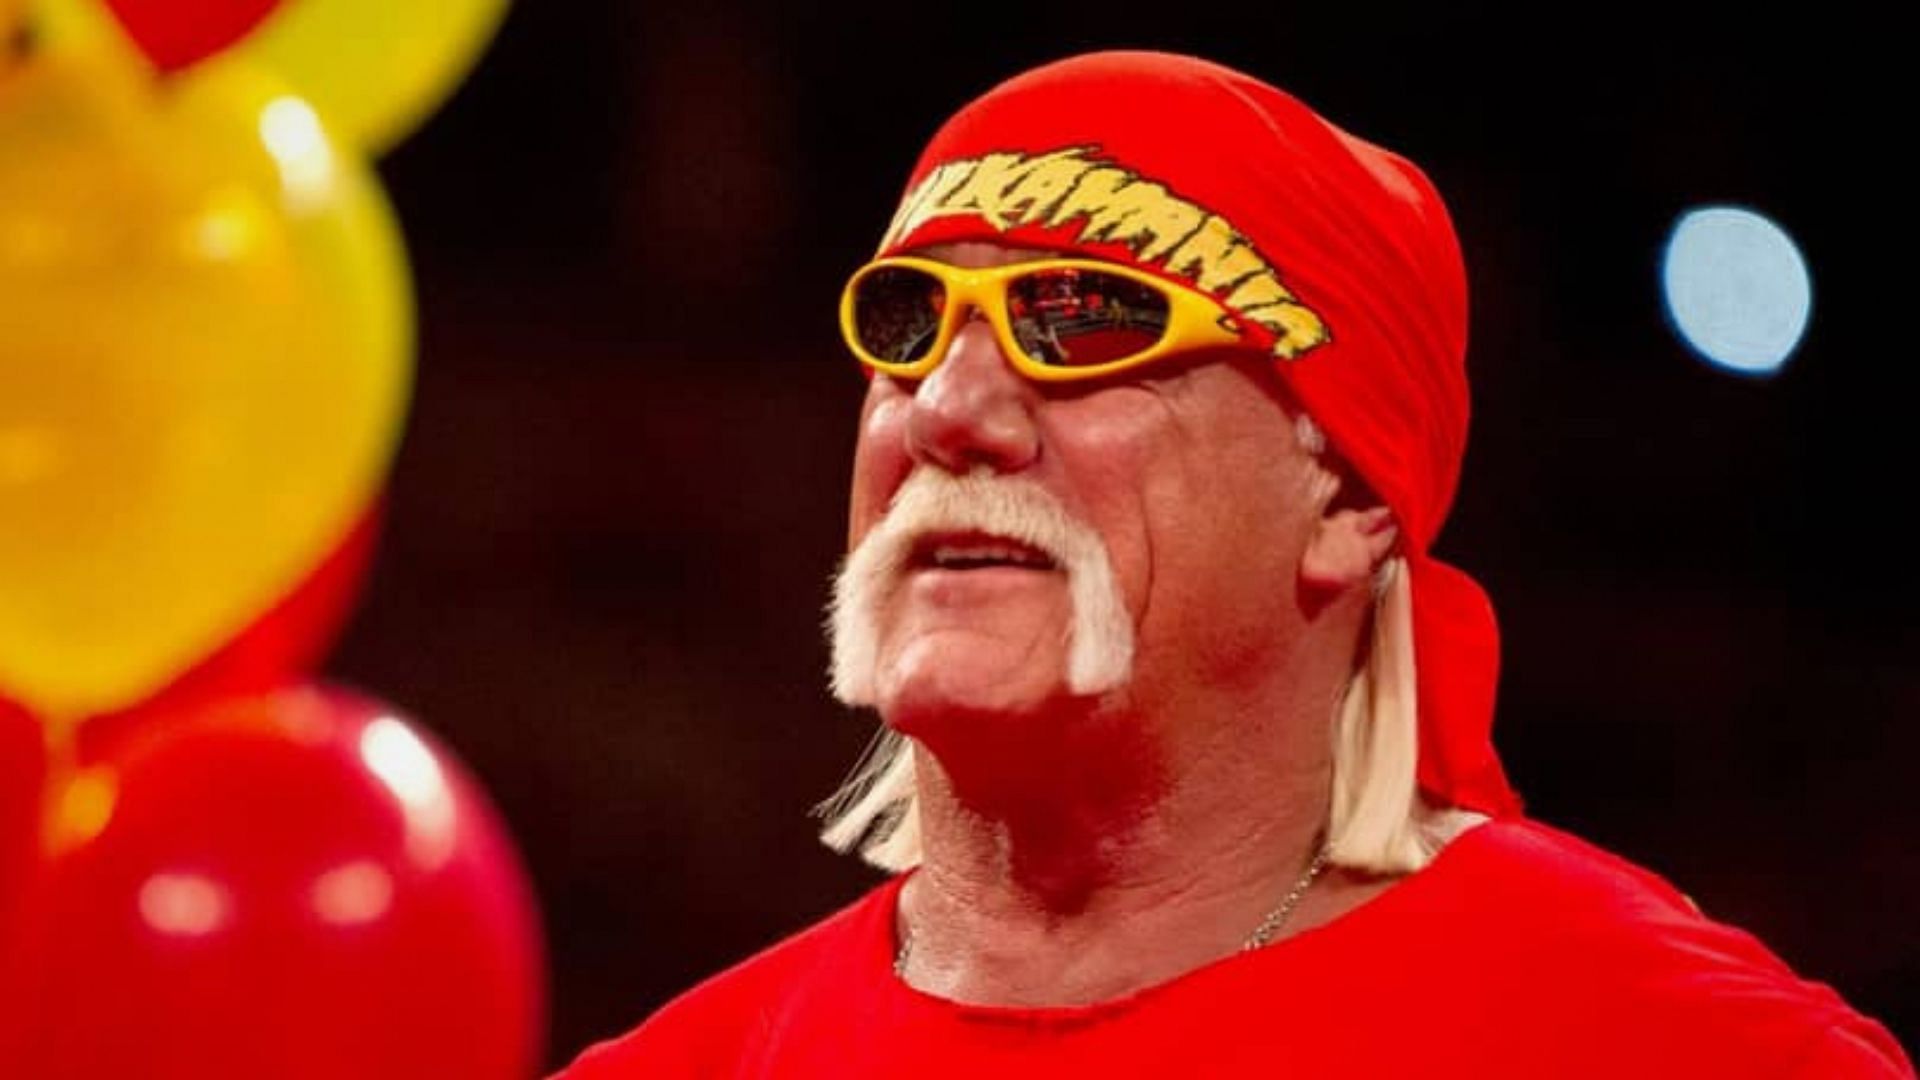 WWE Hall of Famer and overall 12-time World Champion, Hulk Hogan